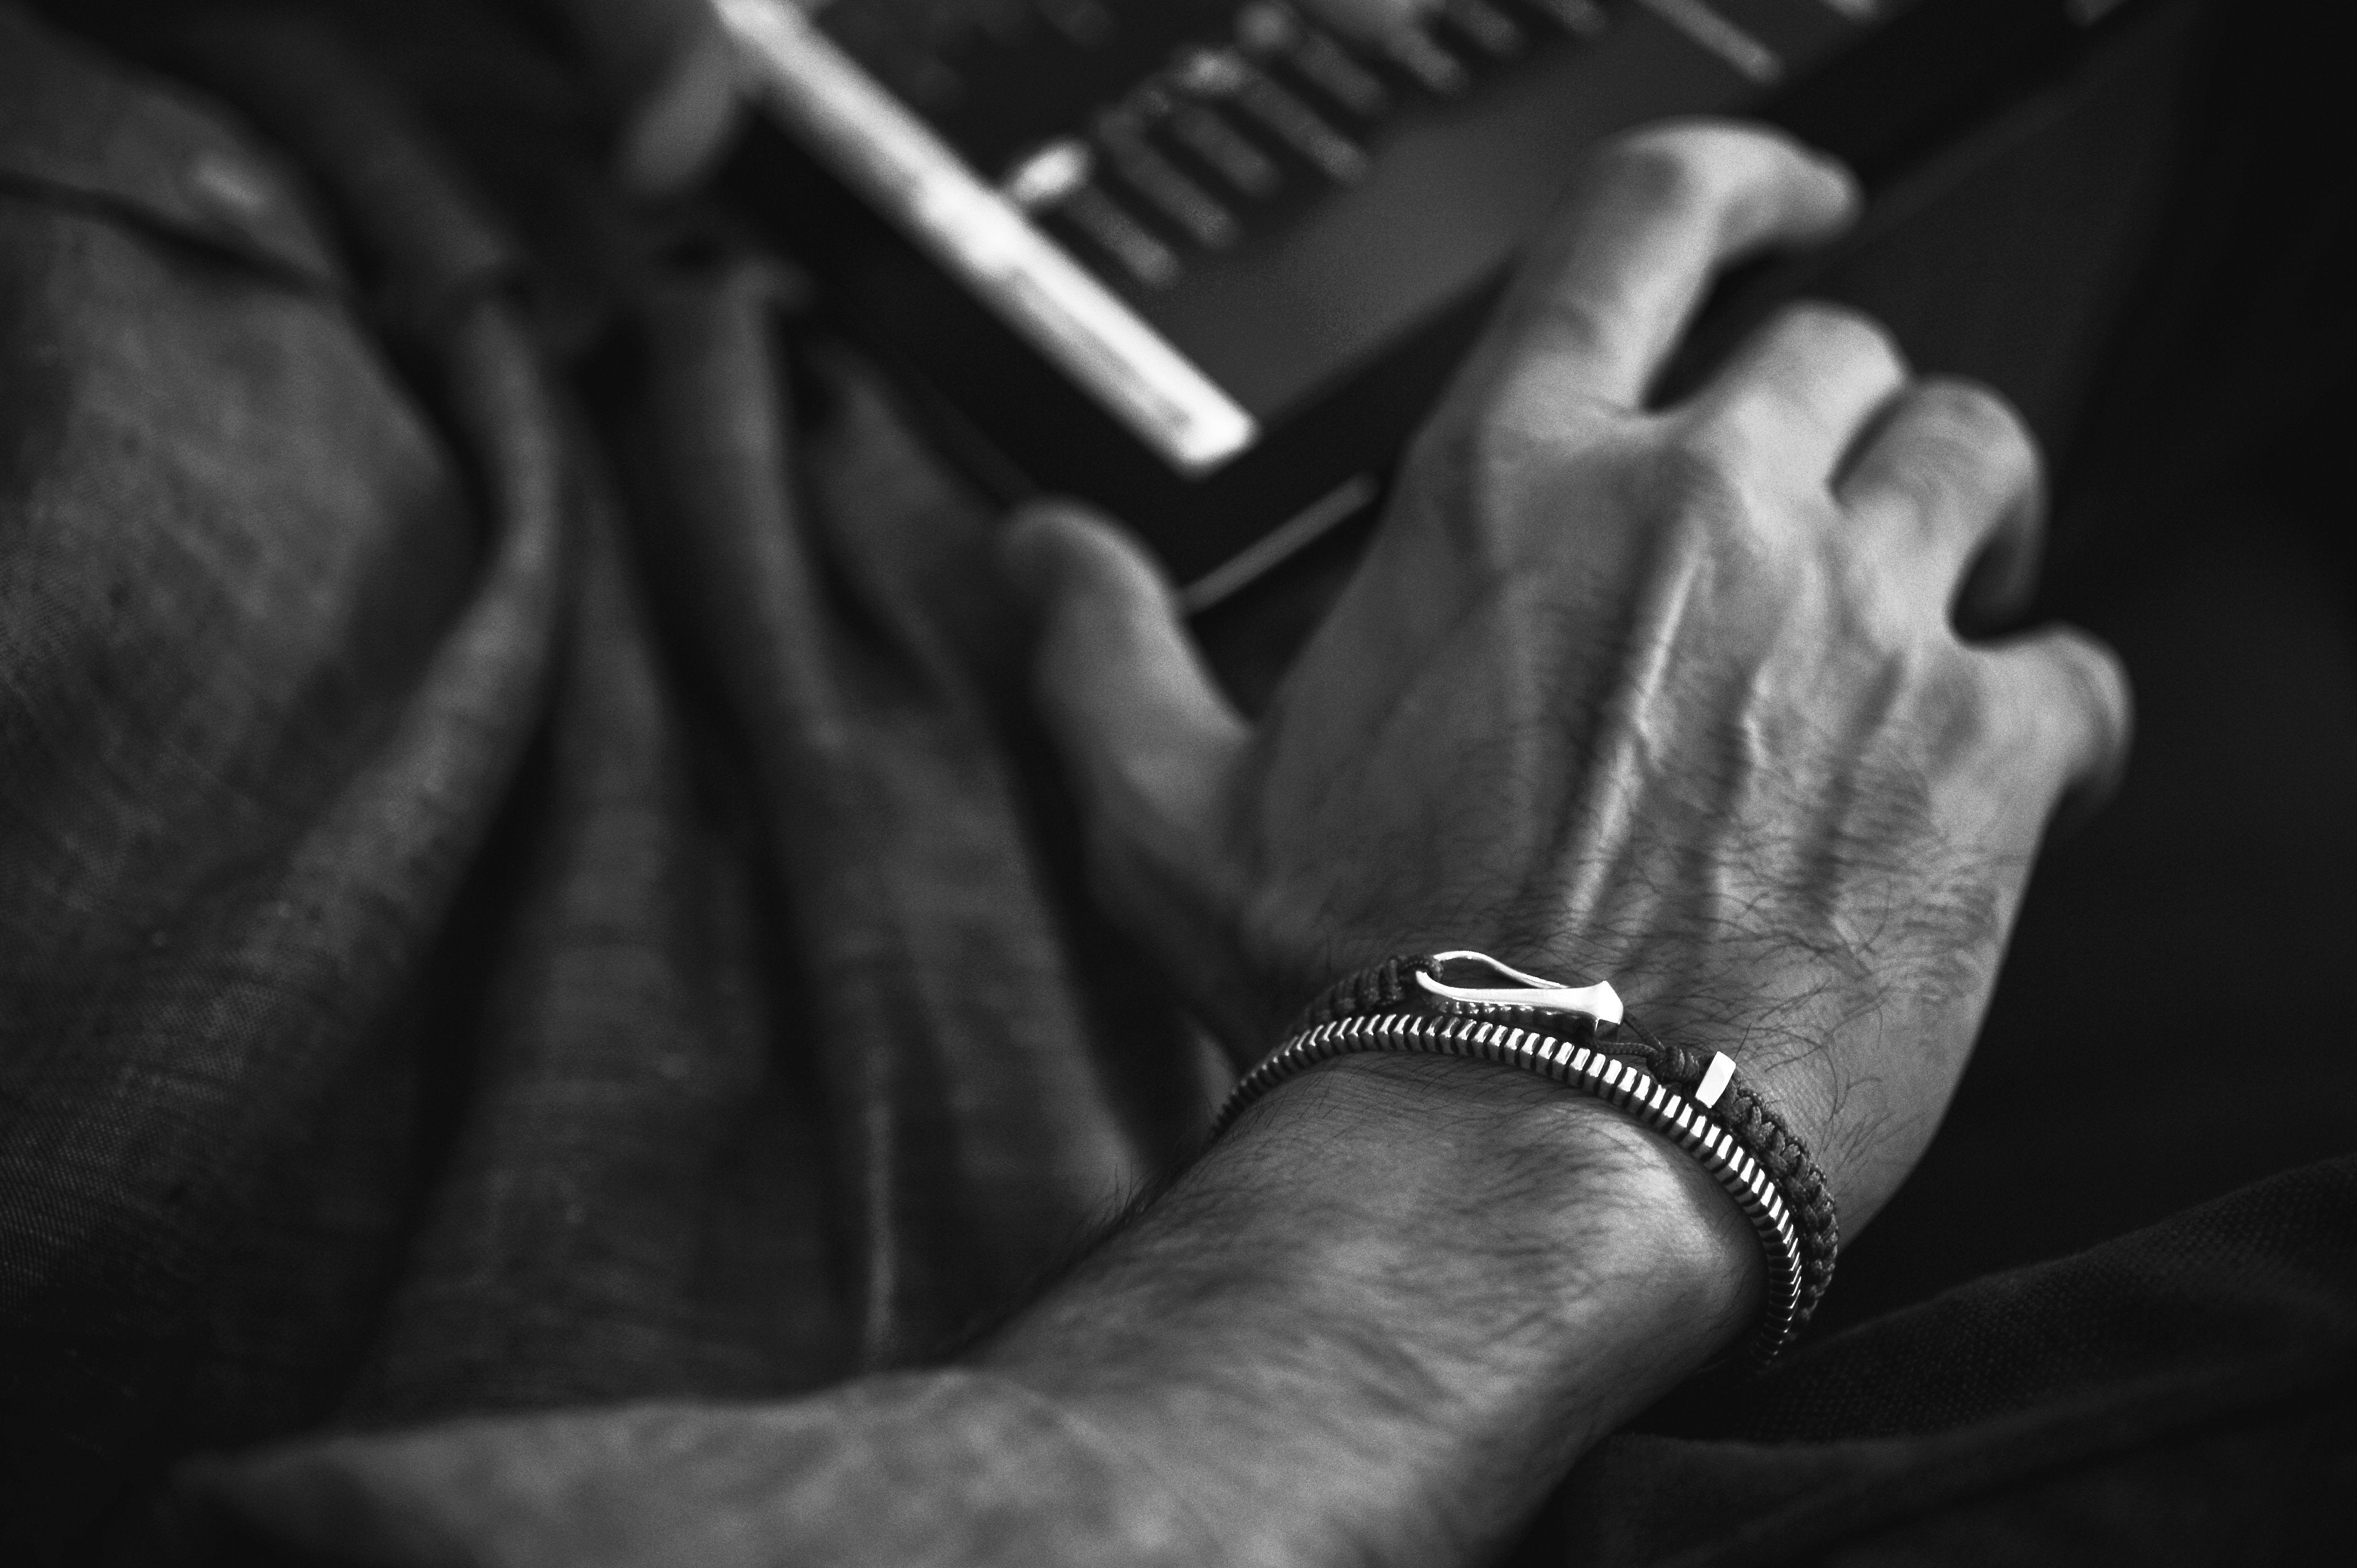 Brant mens cuff bracelet white gold – ZADEH NY